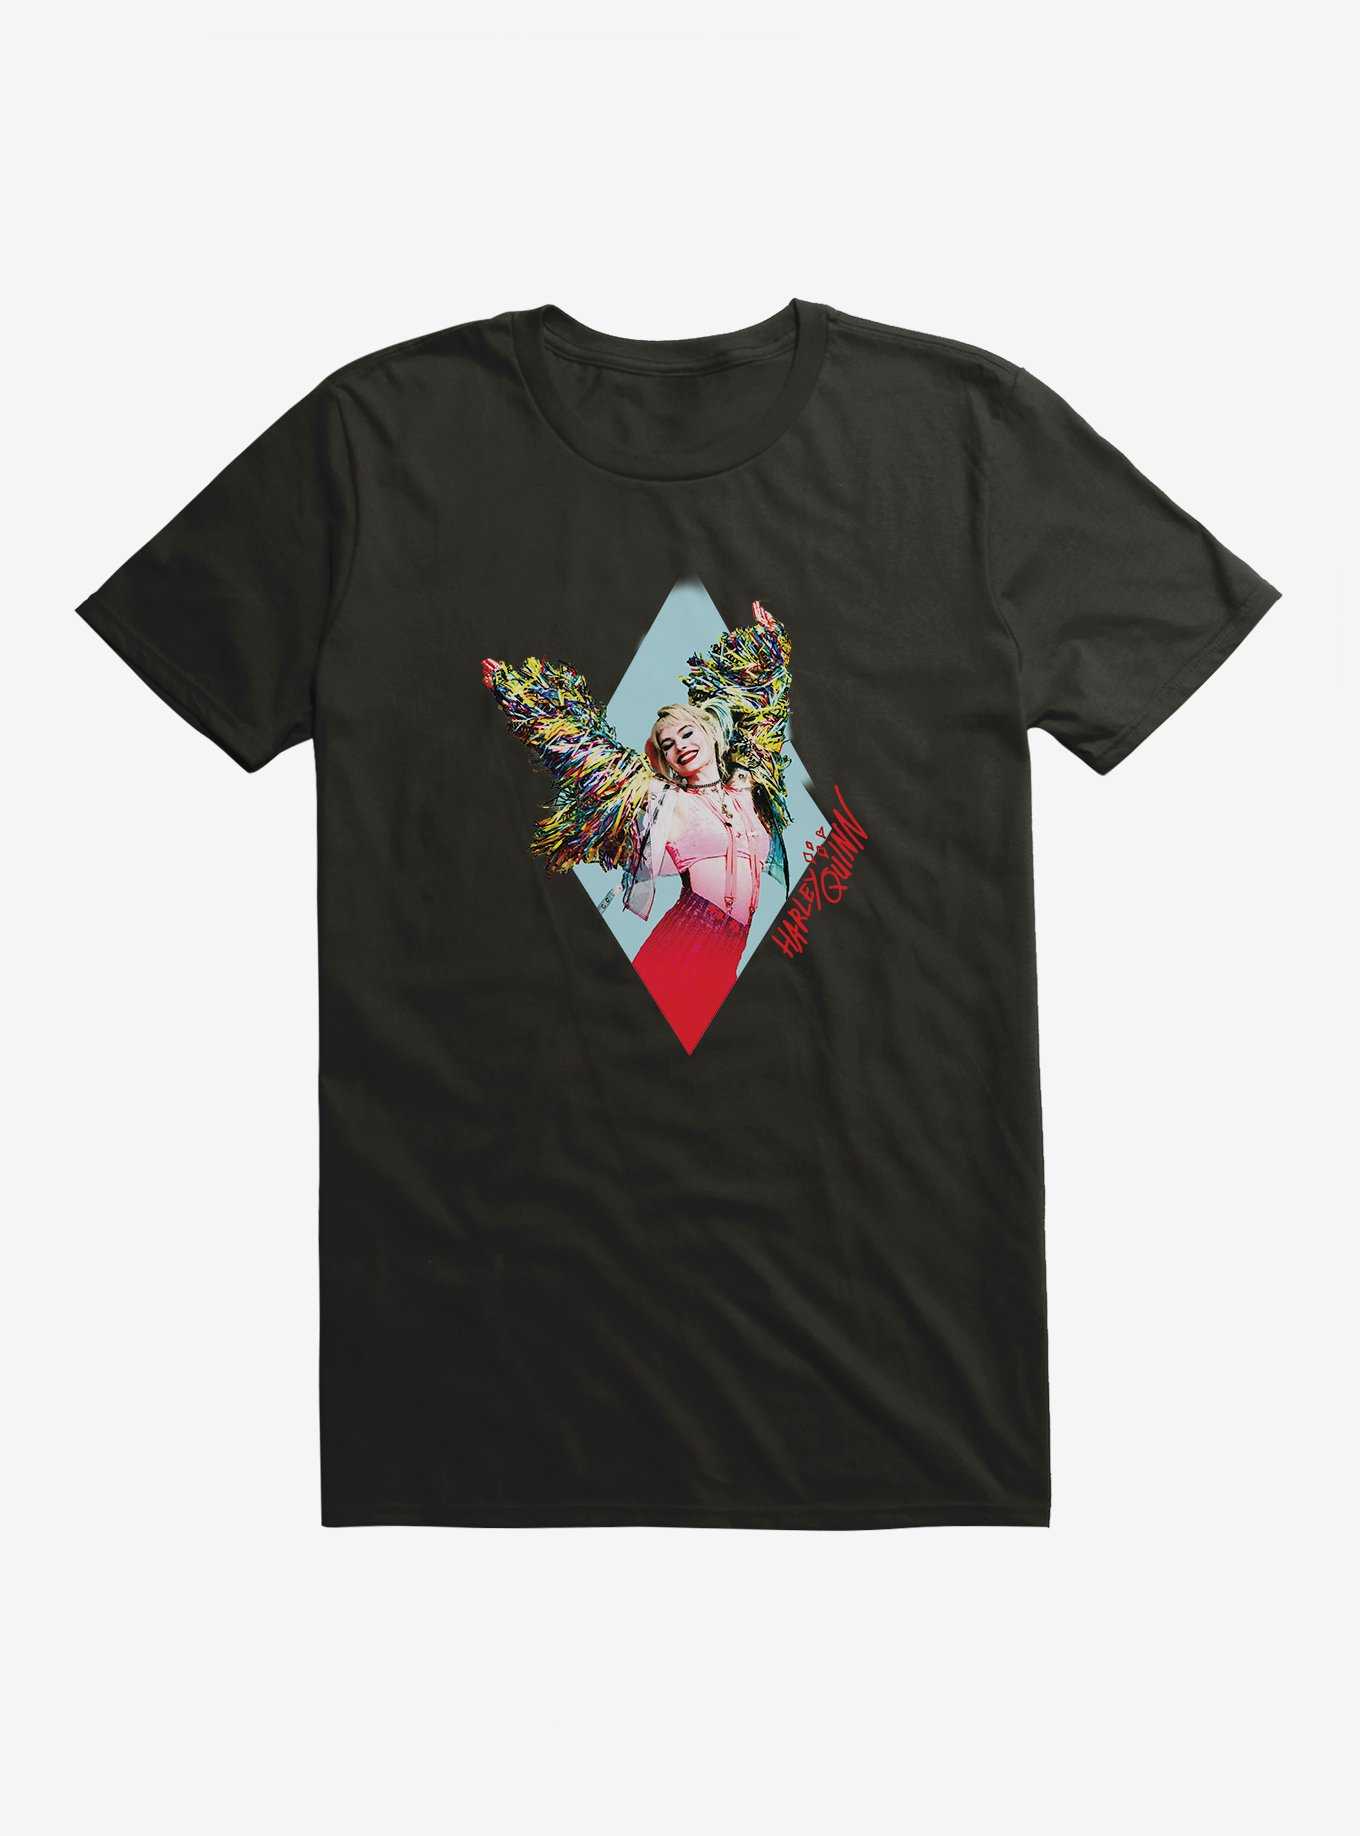 DC Comics Birds Of Prey Harley Quinn Diamond Pose T-Shirt, , hi-res